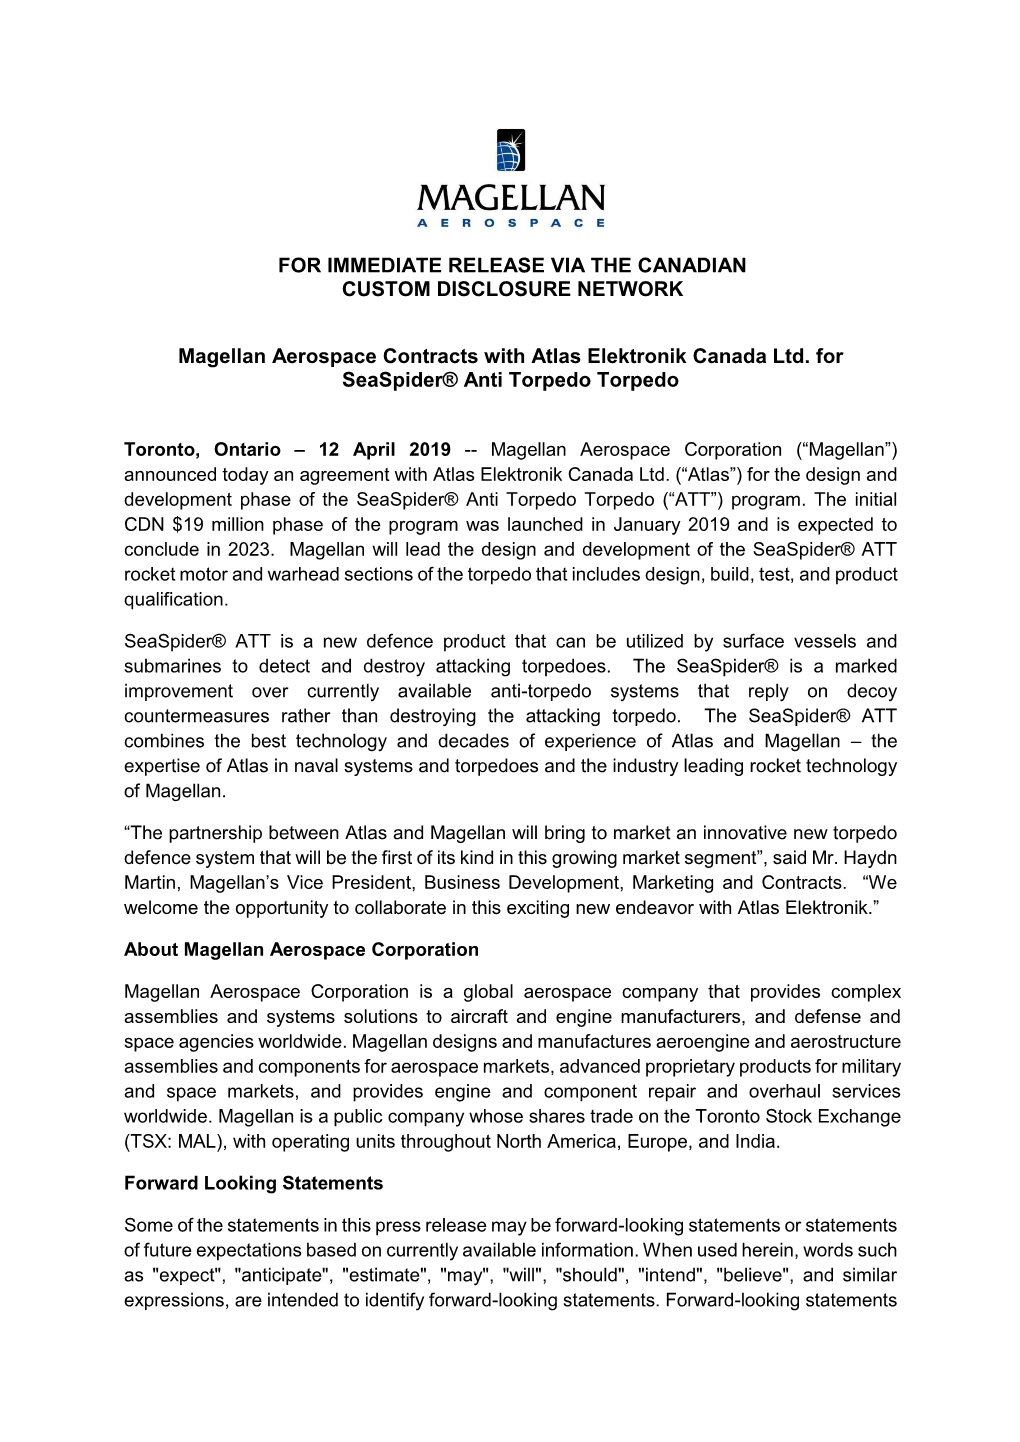 FOR IMMEDIATE RELEASE VIA the CANADIAN CUSTOM DISCLOSURE NETWORK Magellan Aerospace Contracts with Atlas Elektronik Canada